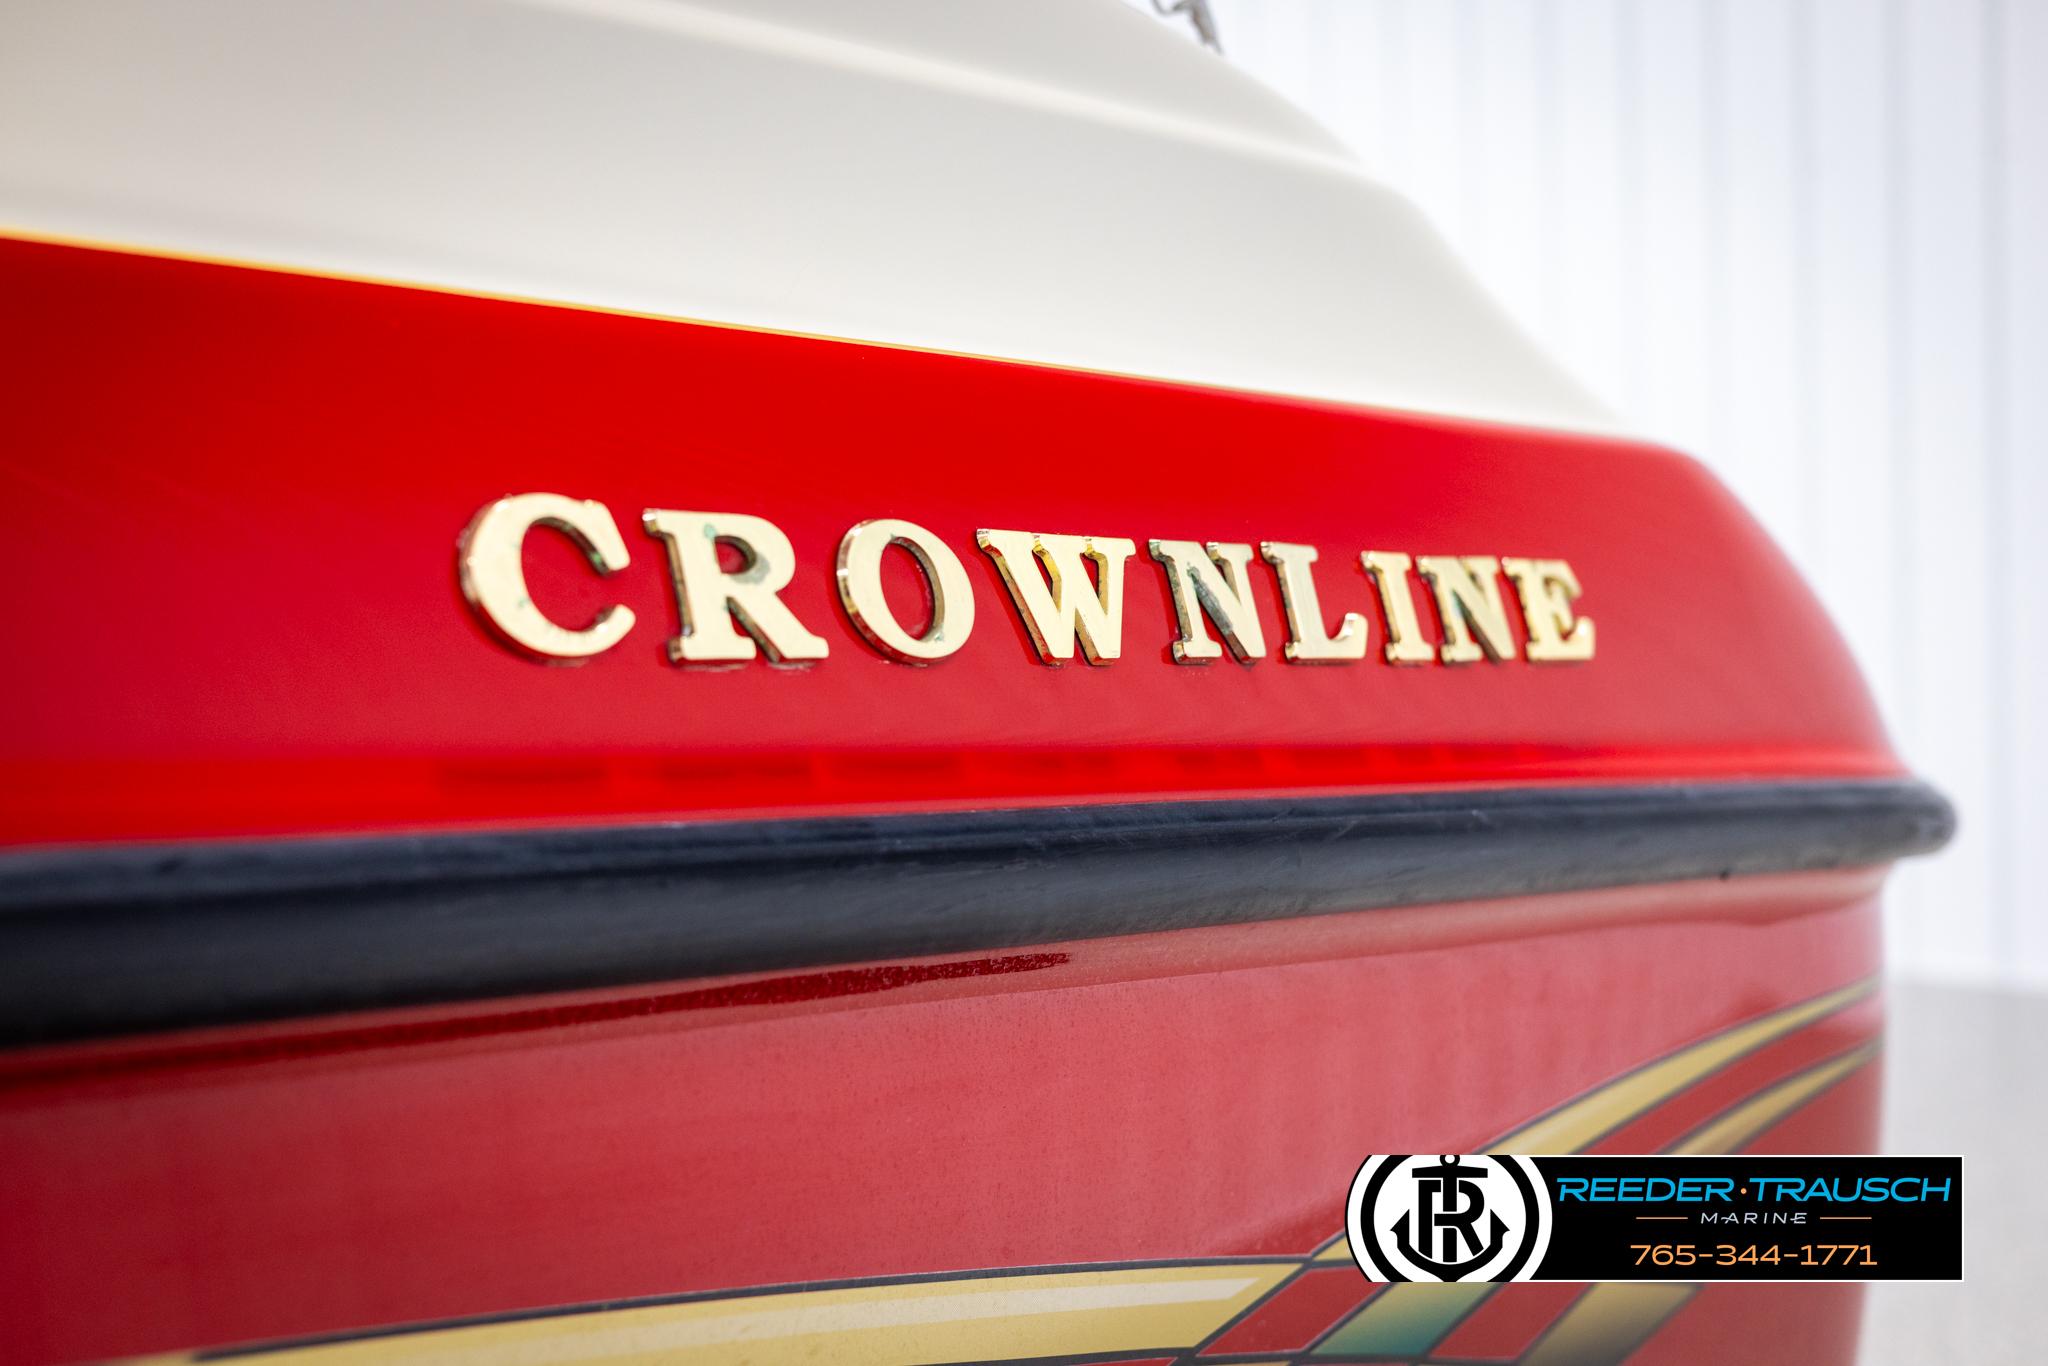 1998 Crownline 182 BR